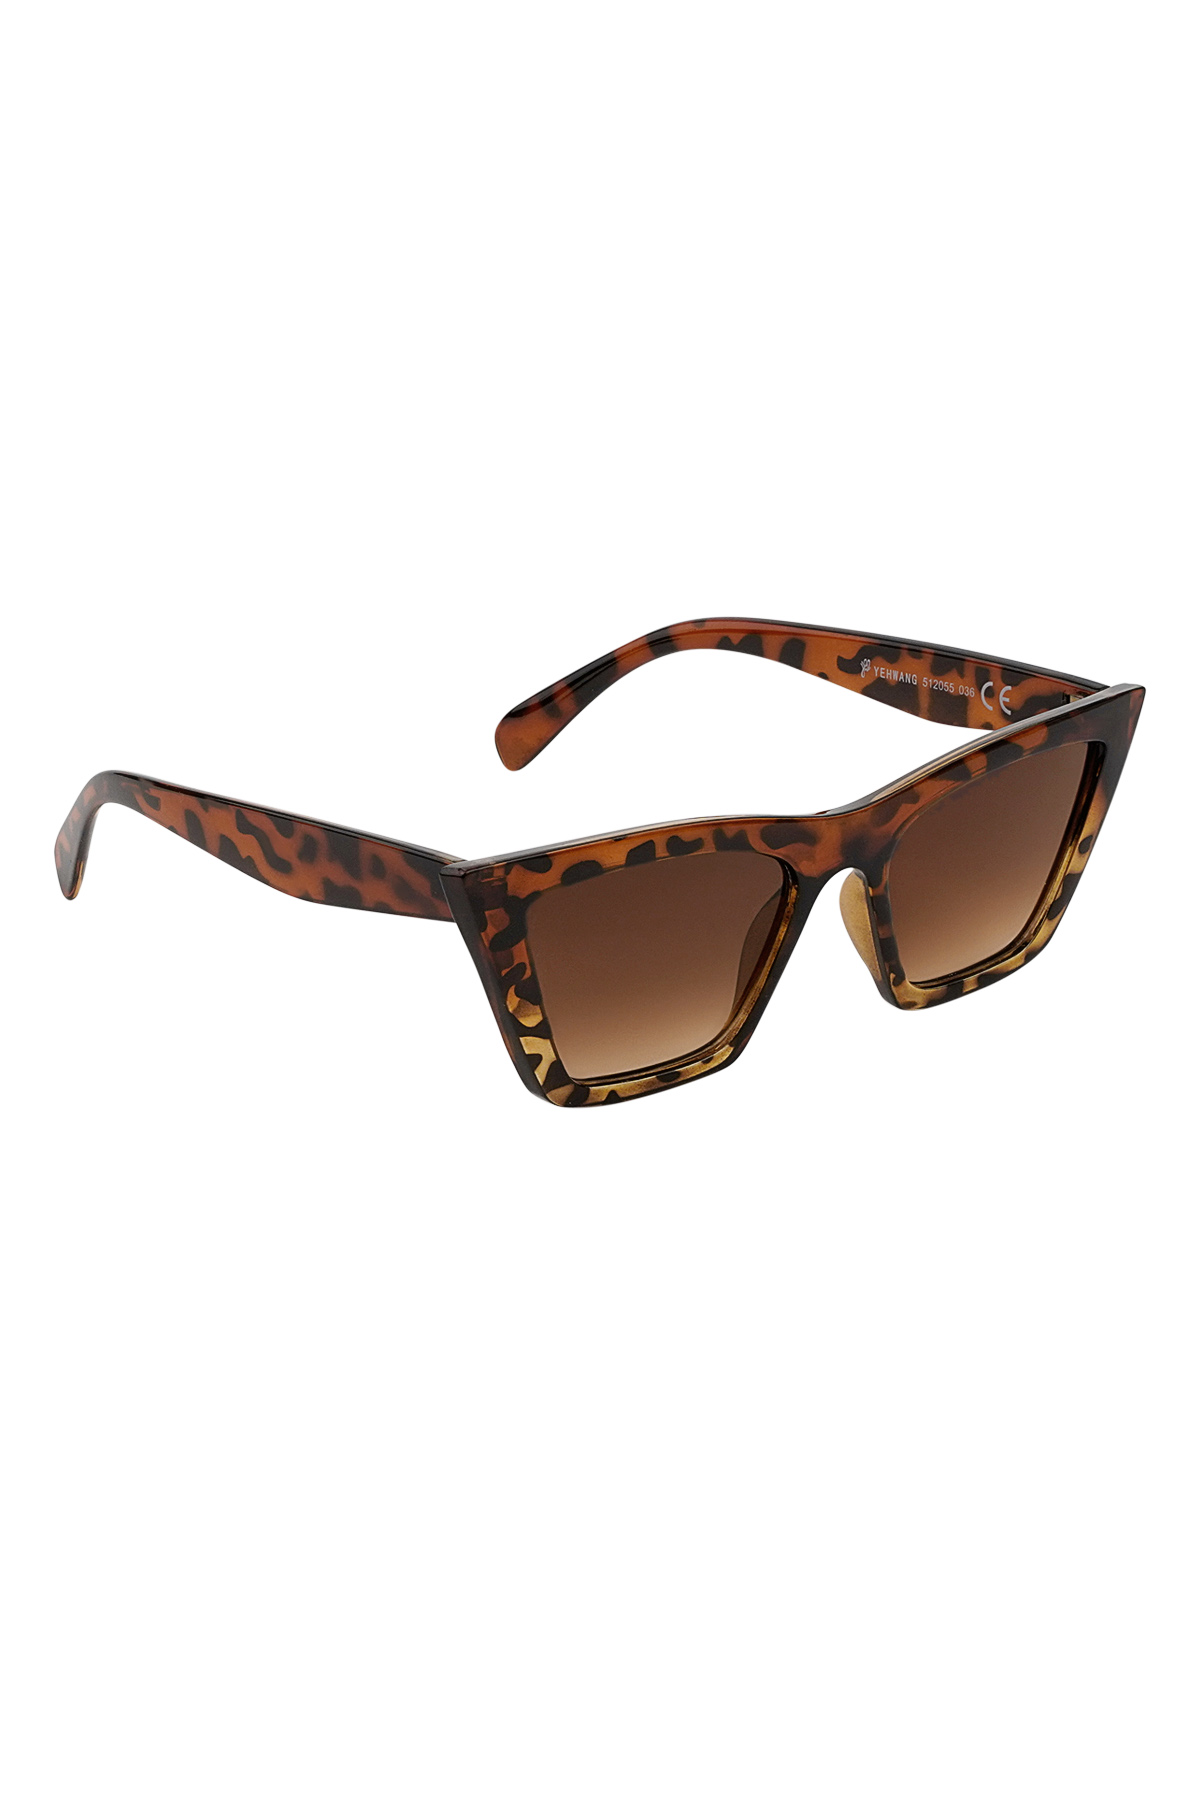 Essential sunglasses simple - brown